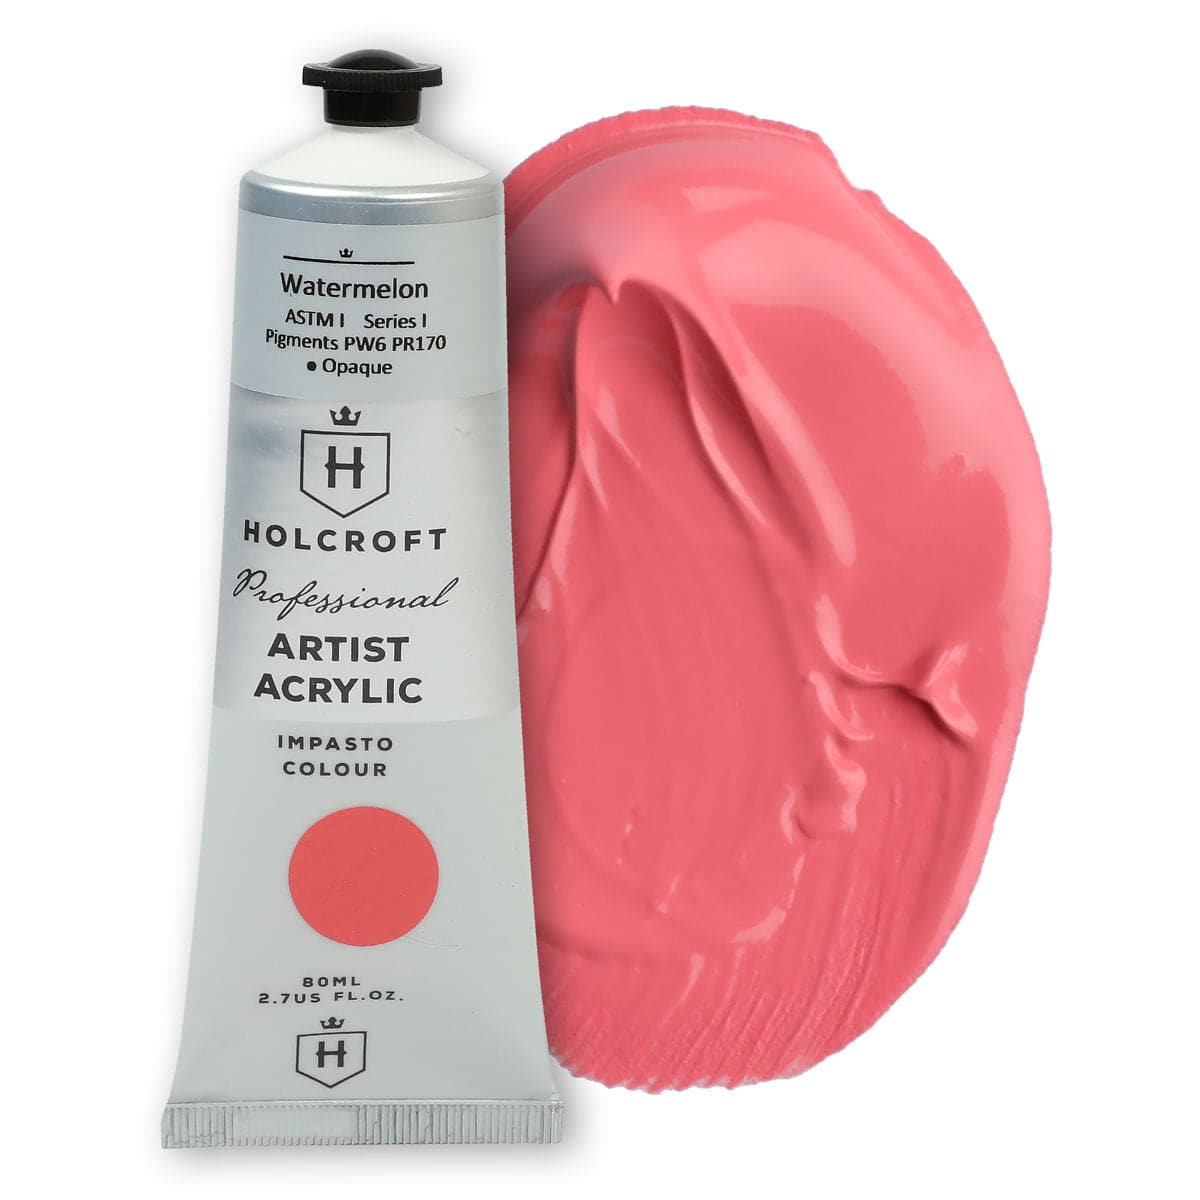 Image of Holcroft Professional Acrylic Impasto Paint Watermelon S1 80ml